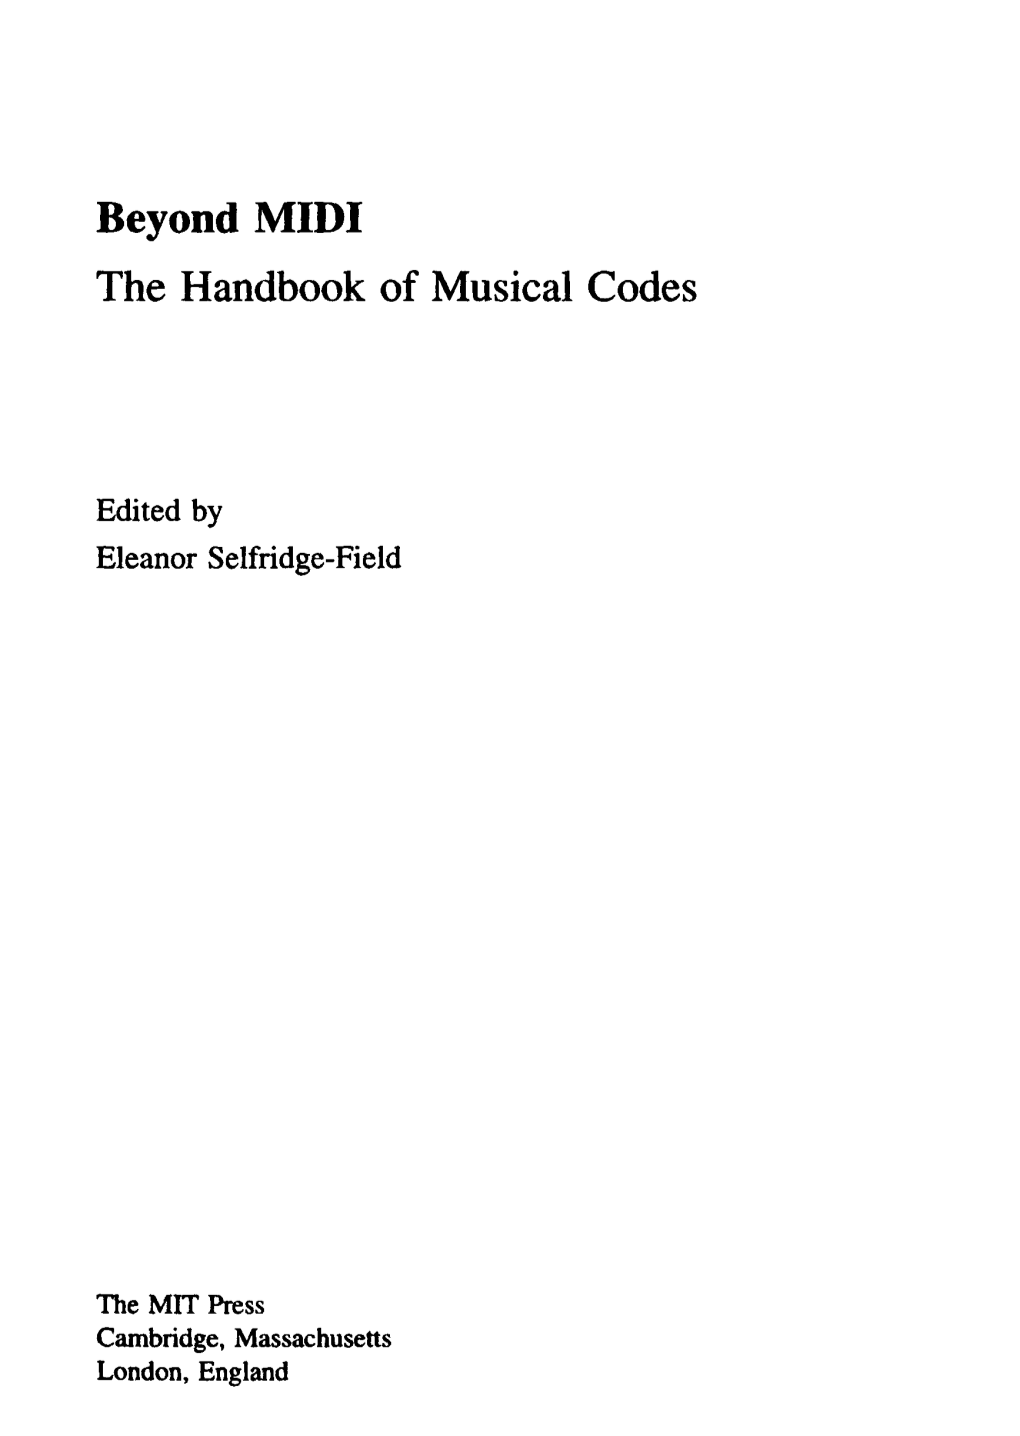 Beyond MIDI the Handbook of Musical Codes